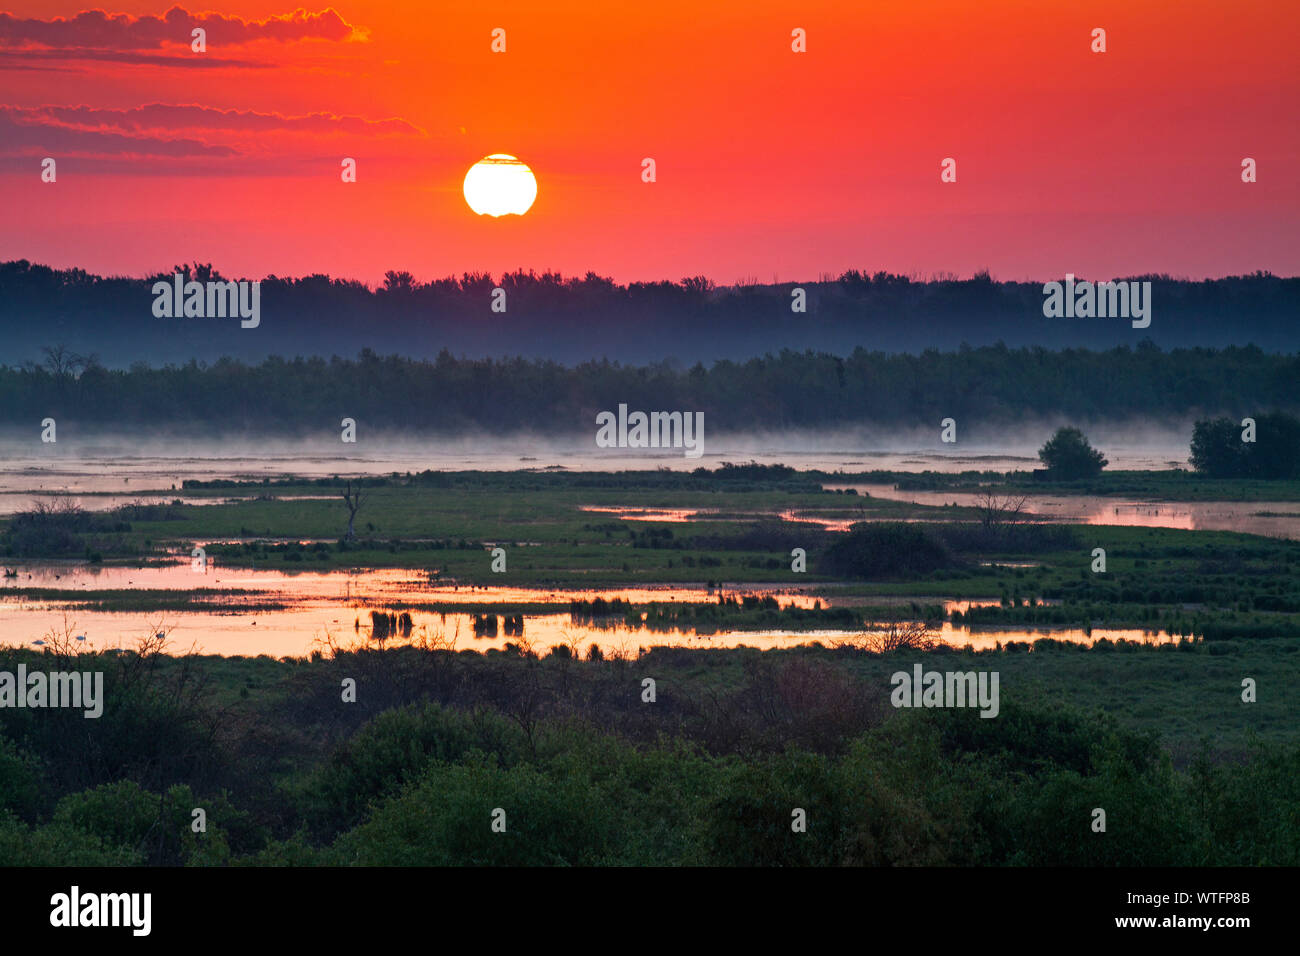 Tiszaalpar Marsh Kiskunsag National Park Hungary May 2014 Stock Photo